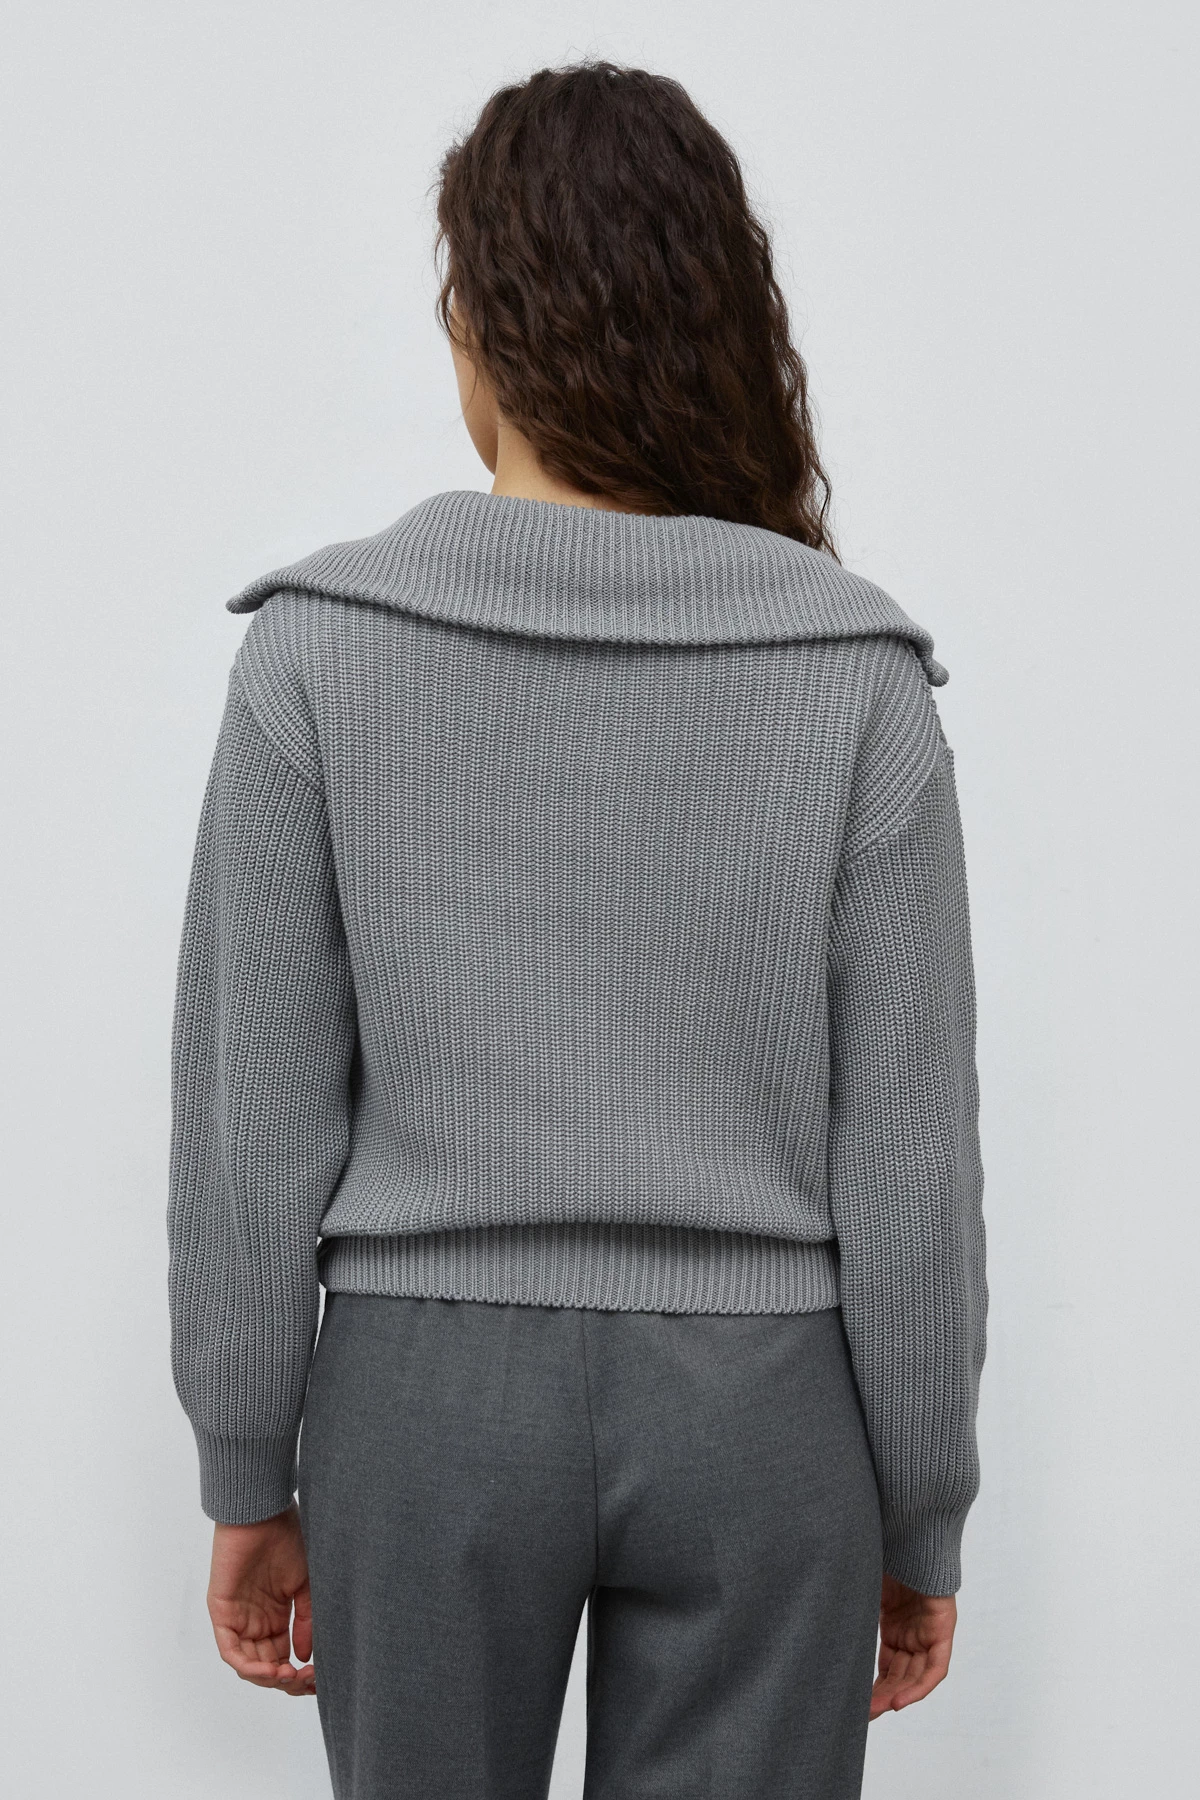 Grey cotton zip-up knit sweater, photo 5